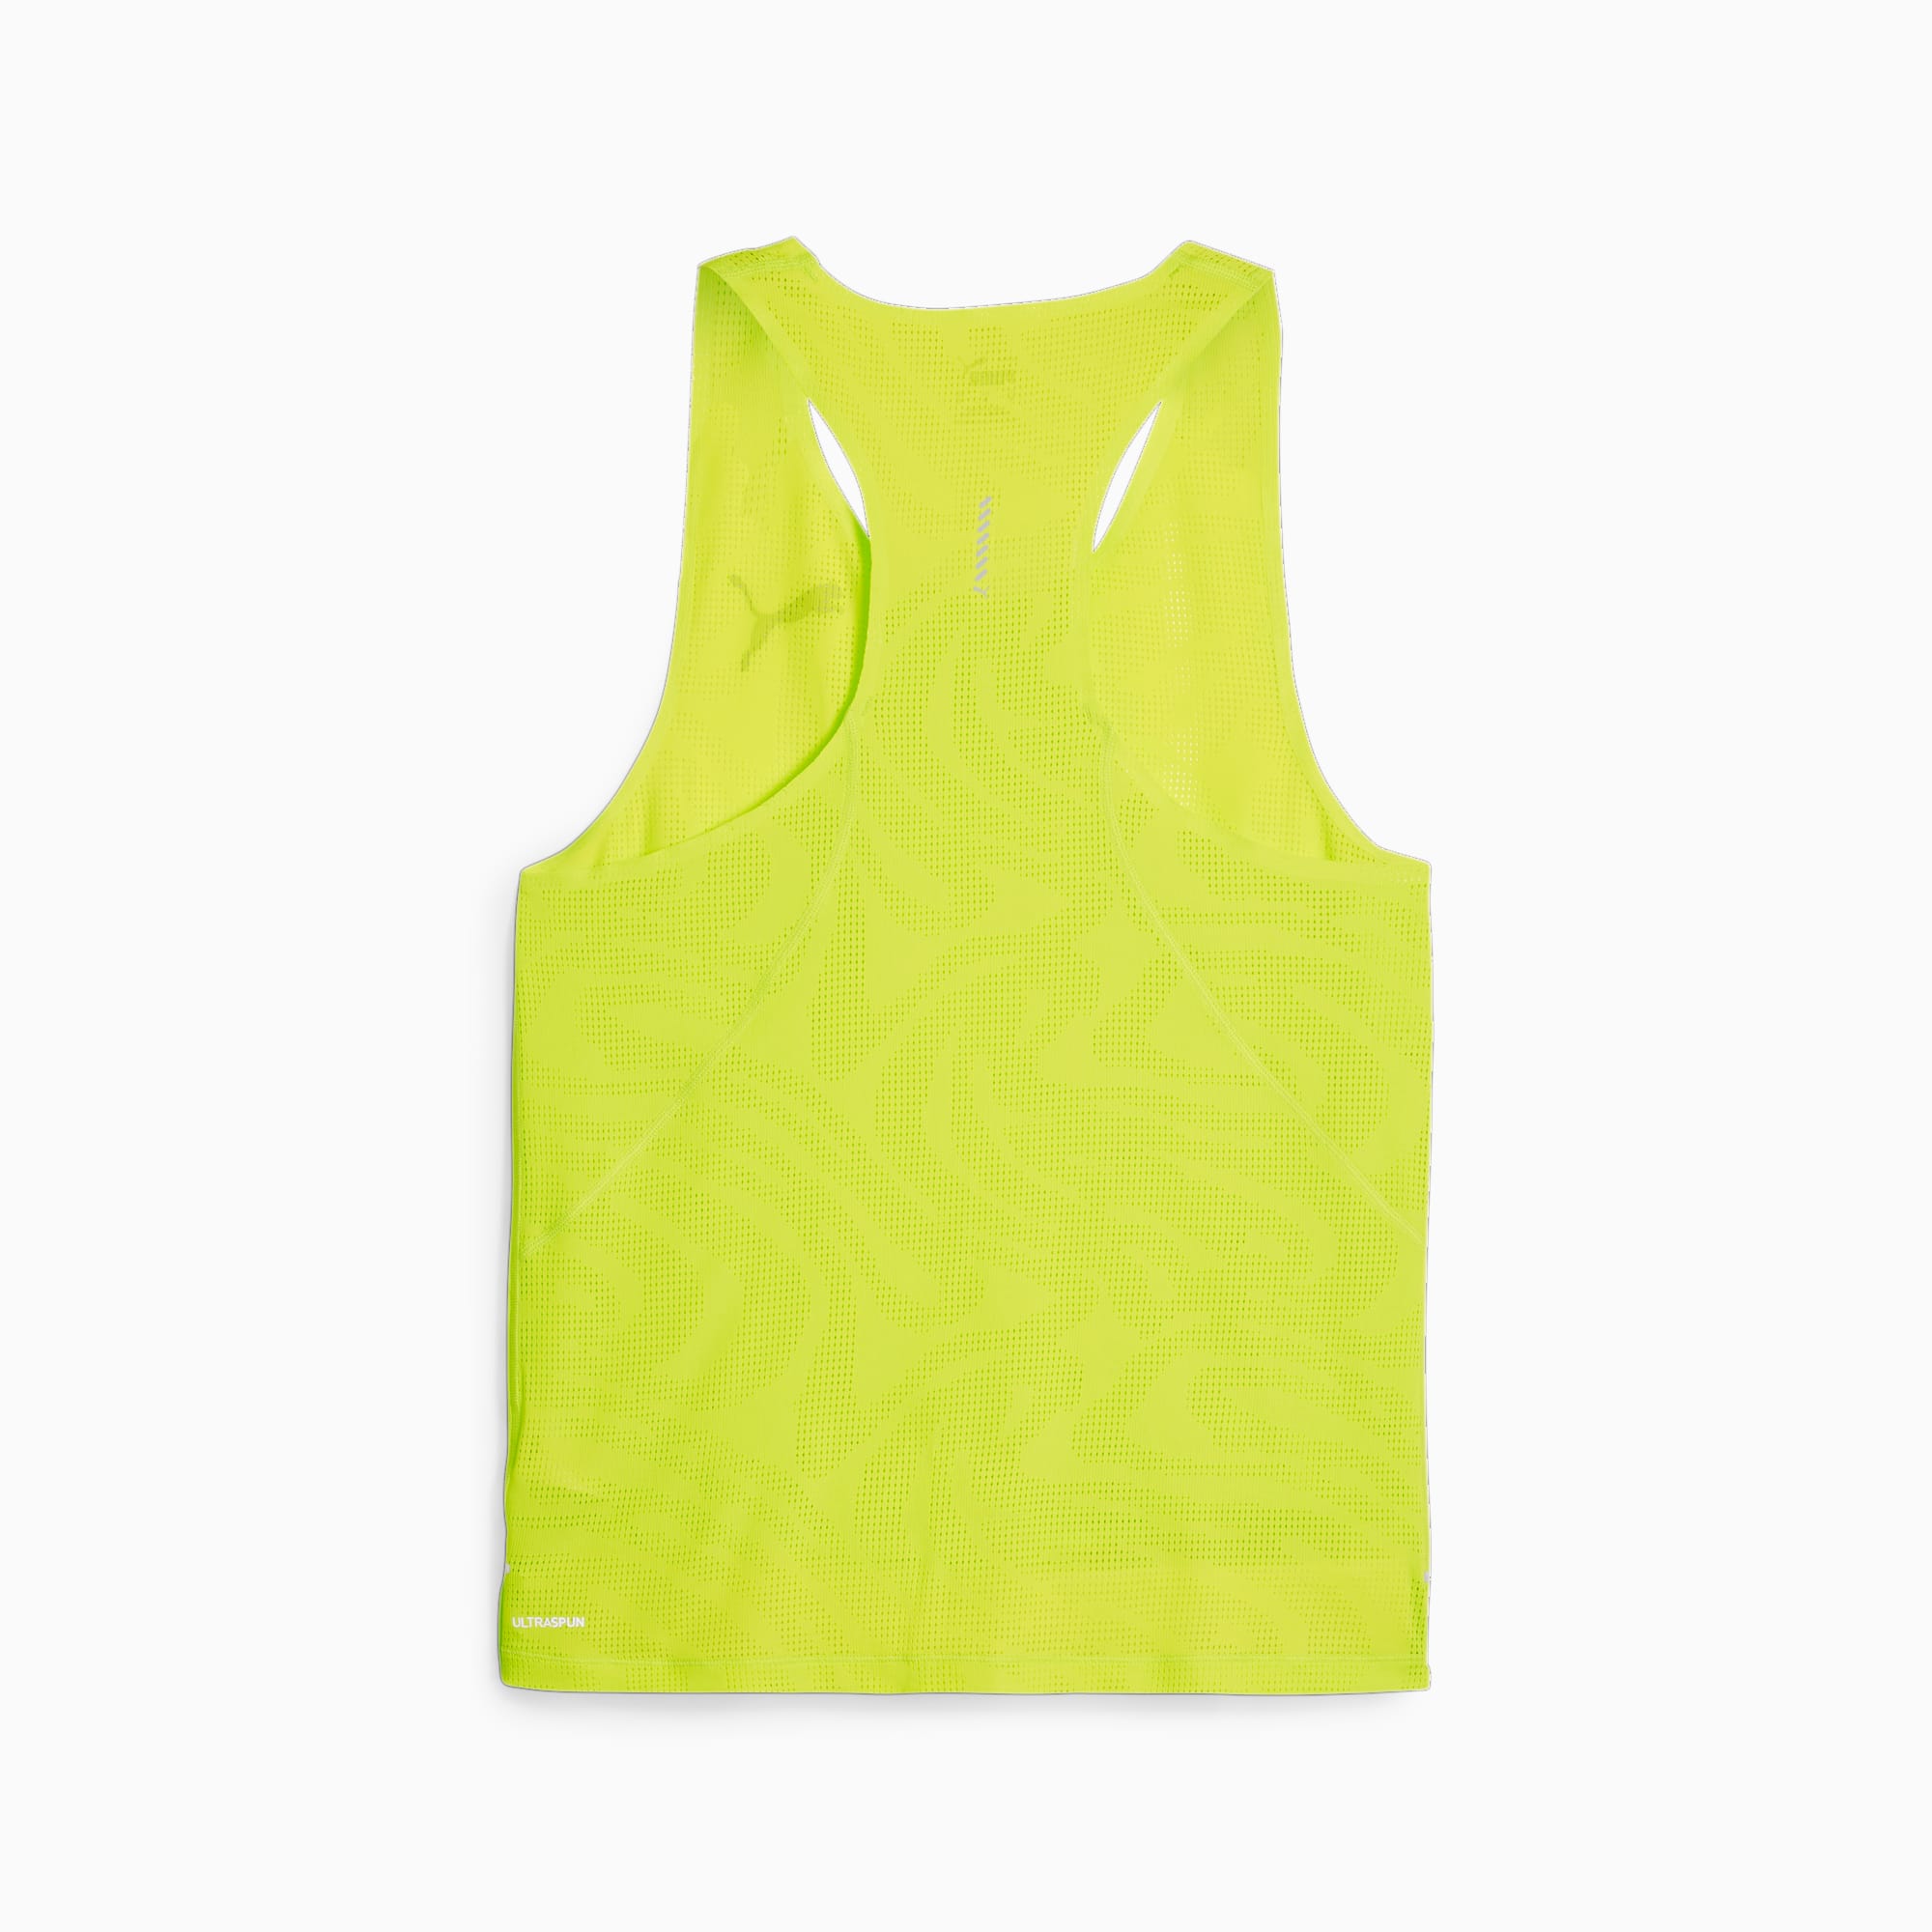 PUMA Run Ultraspun Men's Running Singlet Shirt, Lime Pow, Size XS, Clothing